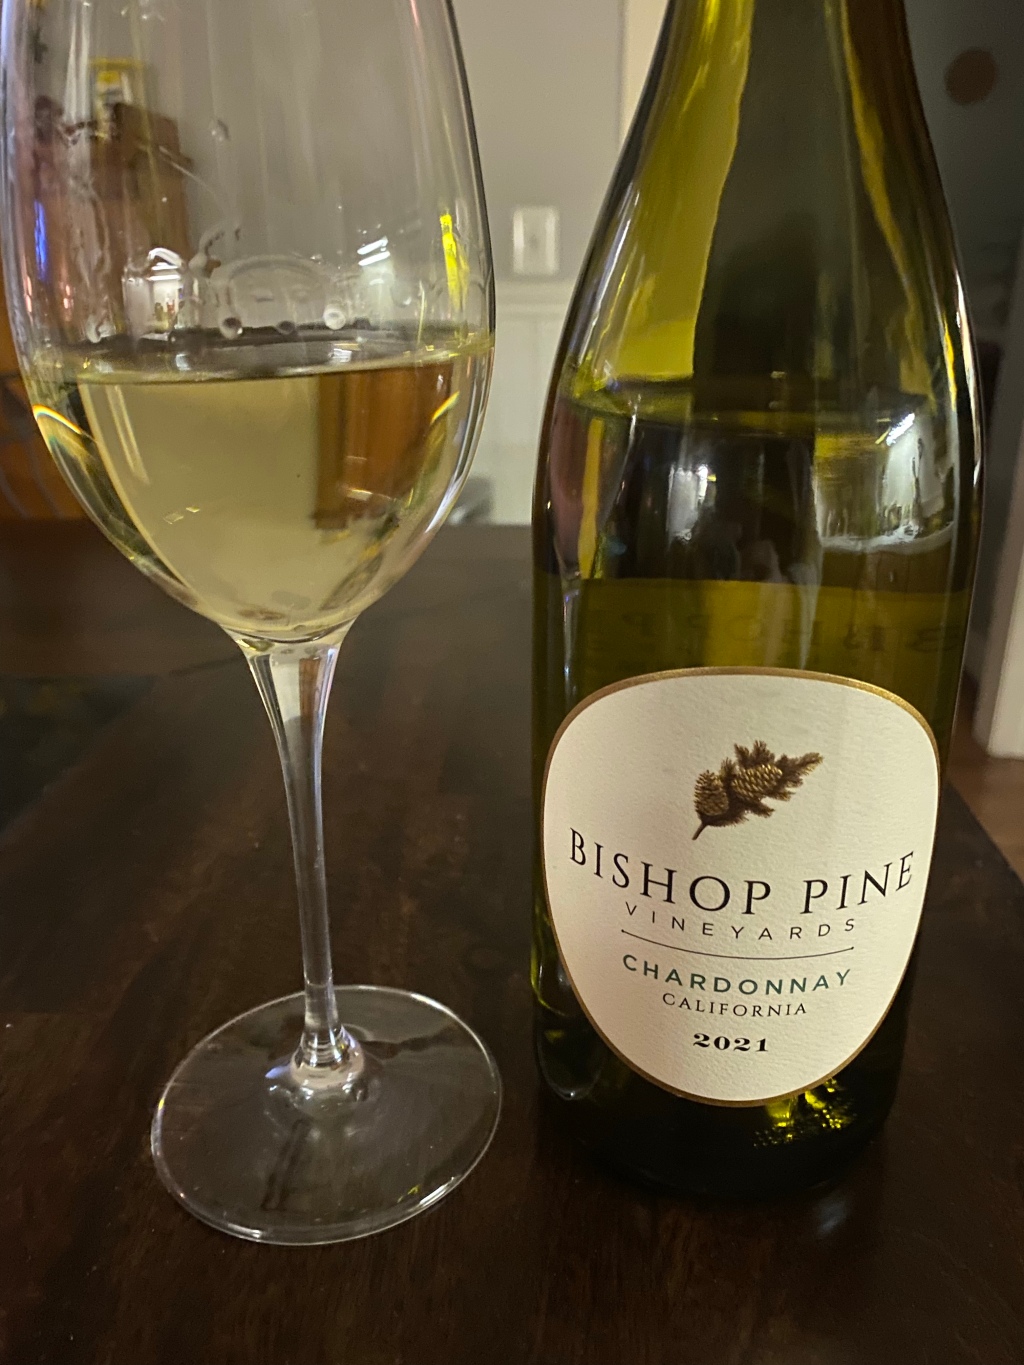 Bishop Pine Chardonnay